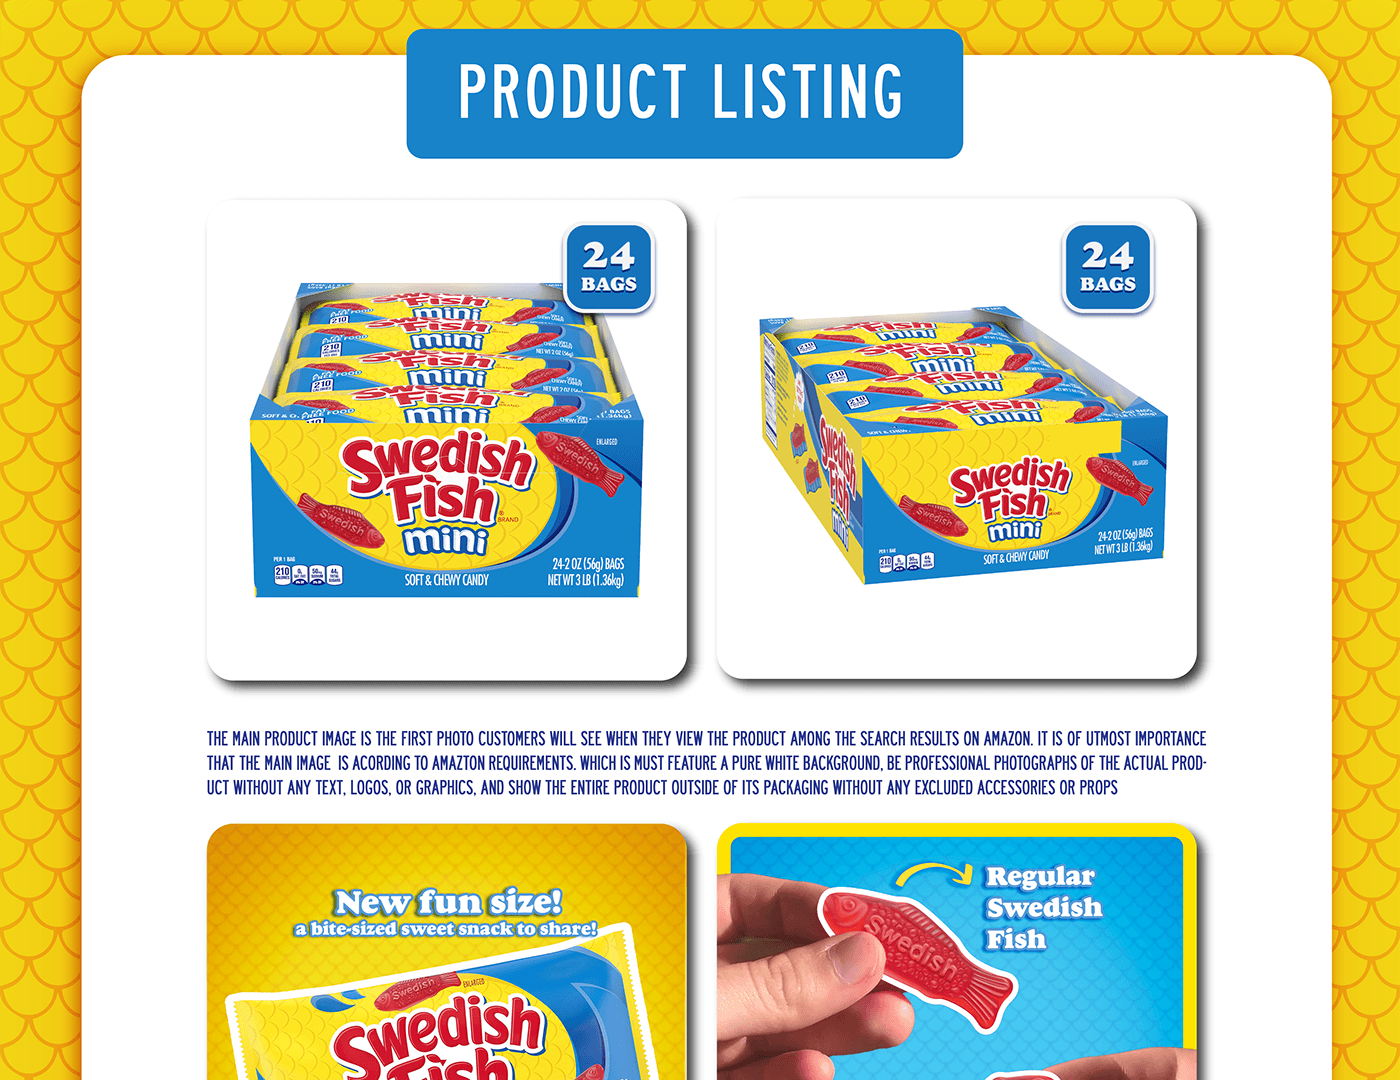 Swedish Fish Candy Amazon Listing amazon ebc Amazon product listing A+ Content listing design Listing Images EBC Design Amazon A+ content